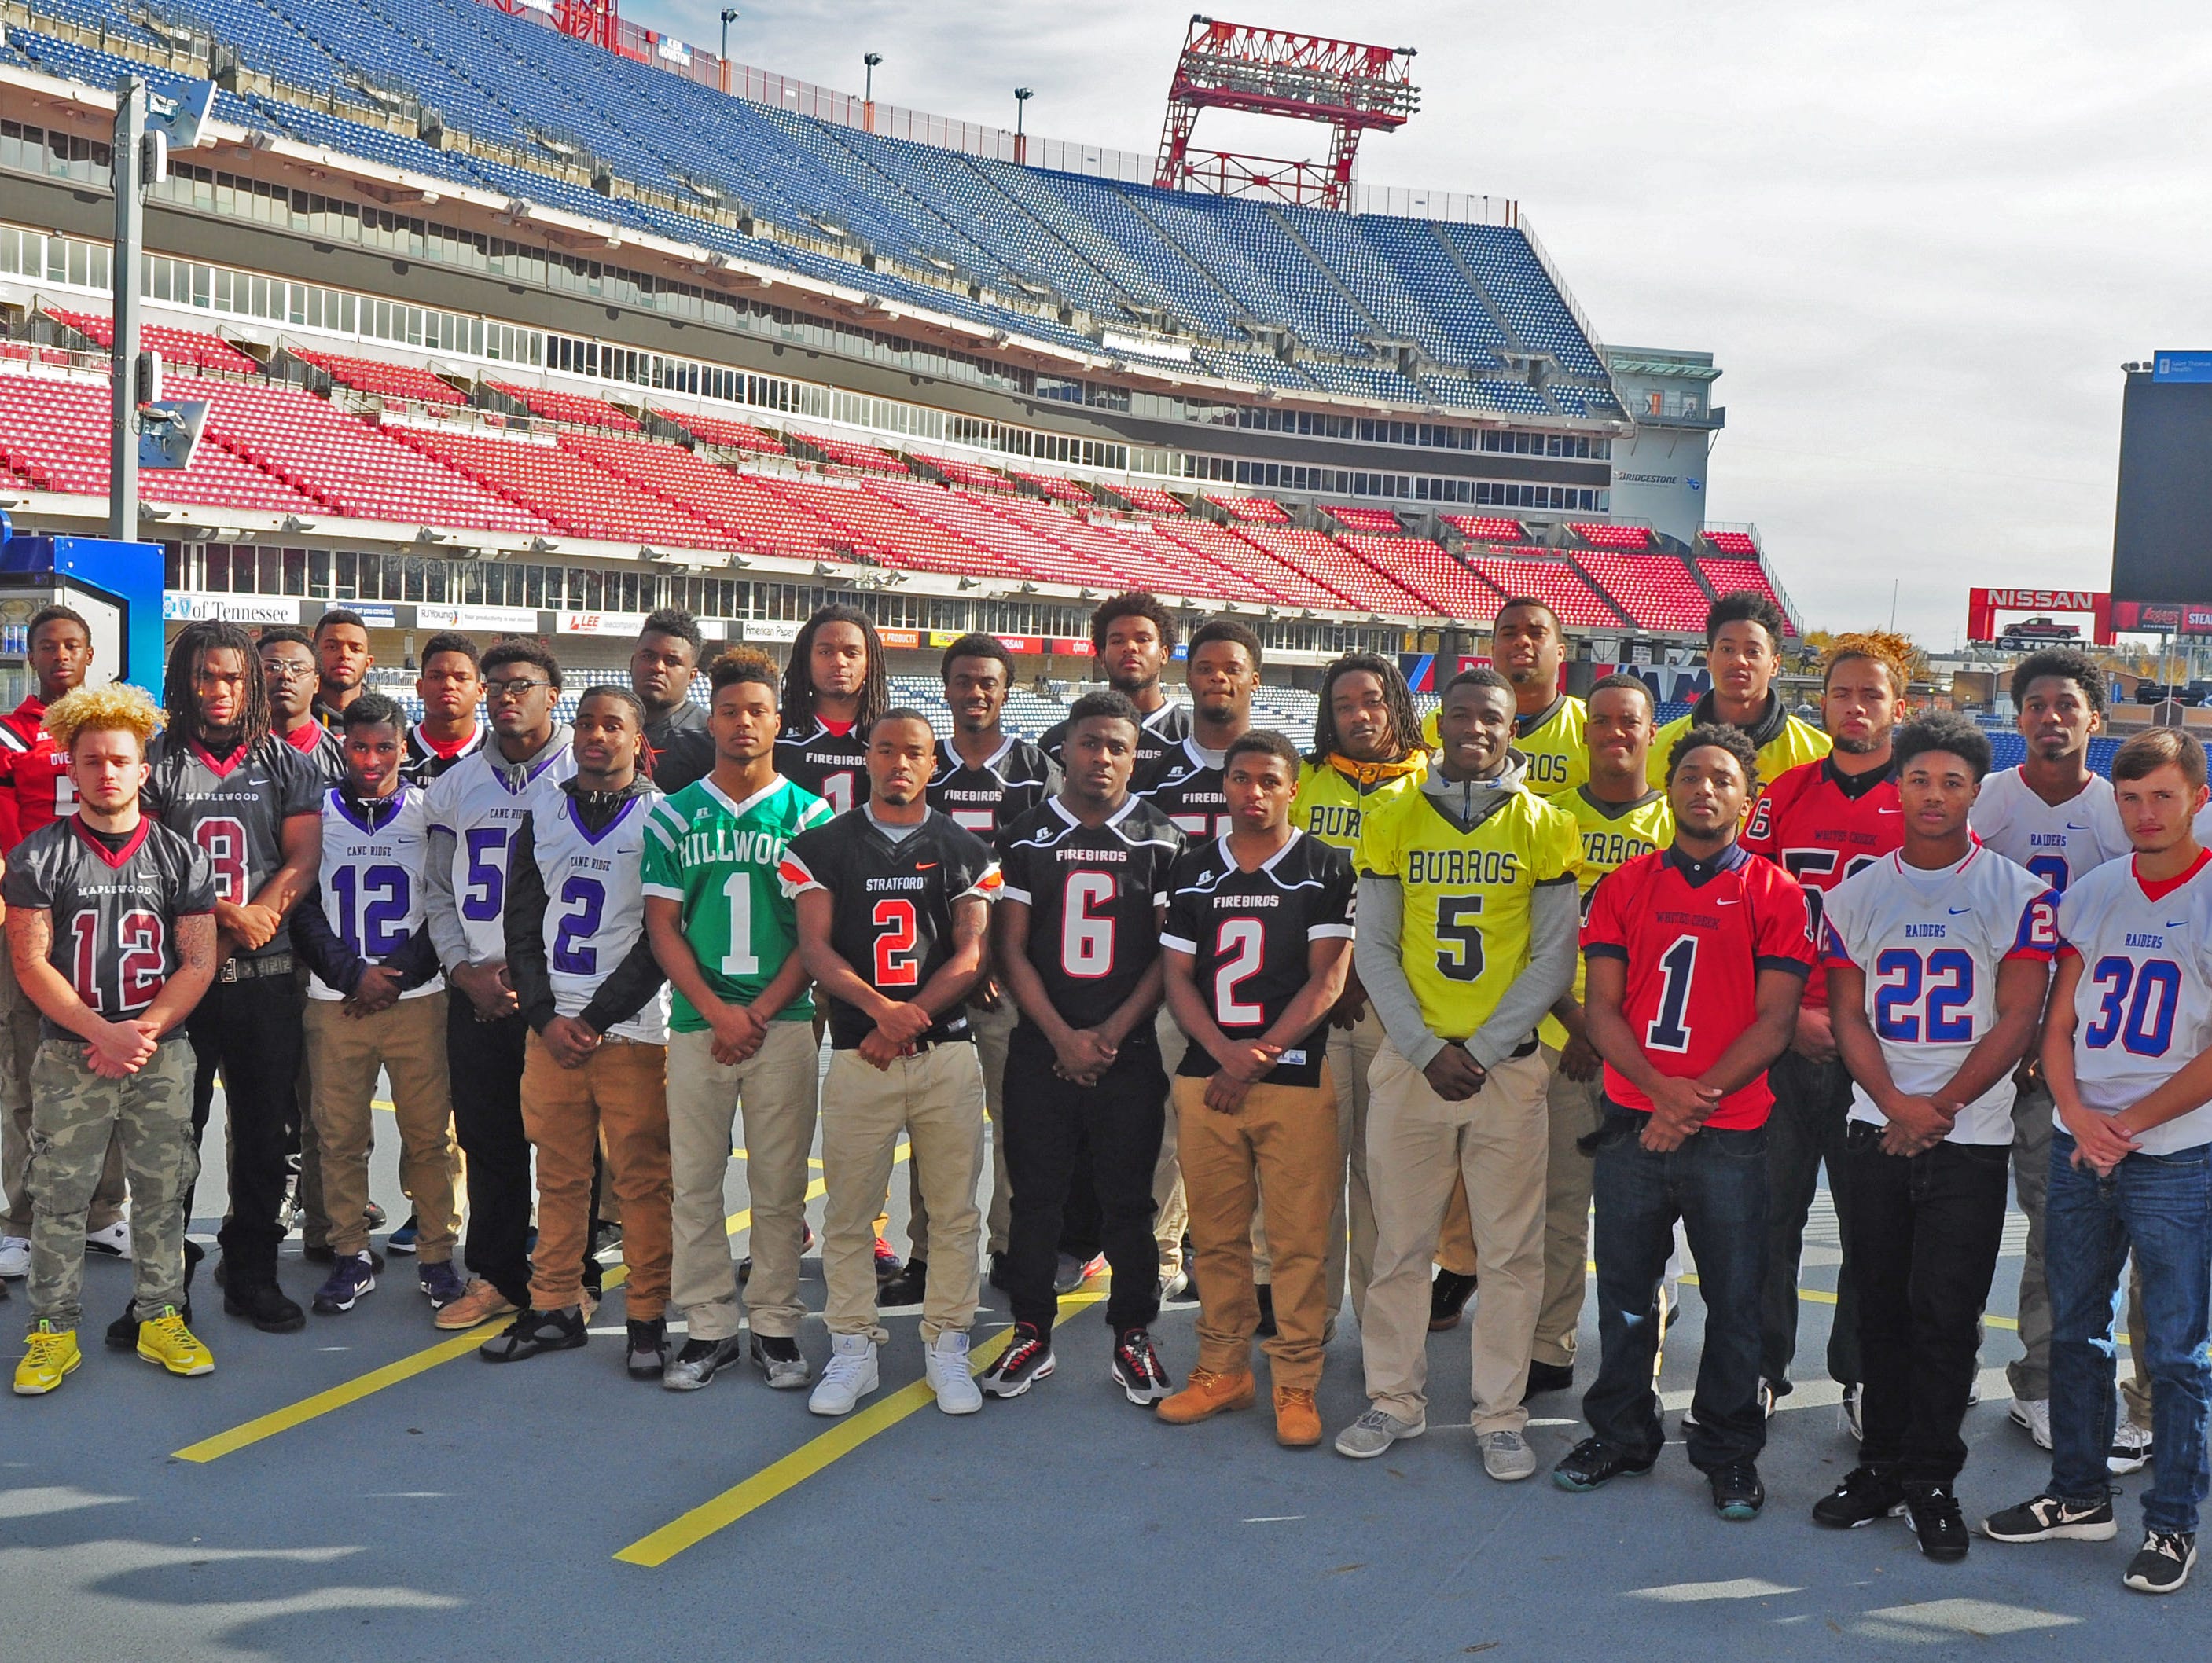 Metro Nashville Public Schools announced its All-City Football team on Tuesday.